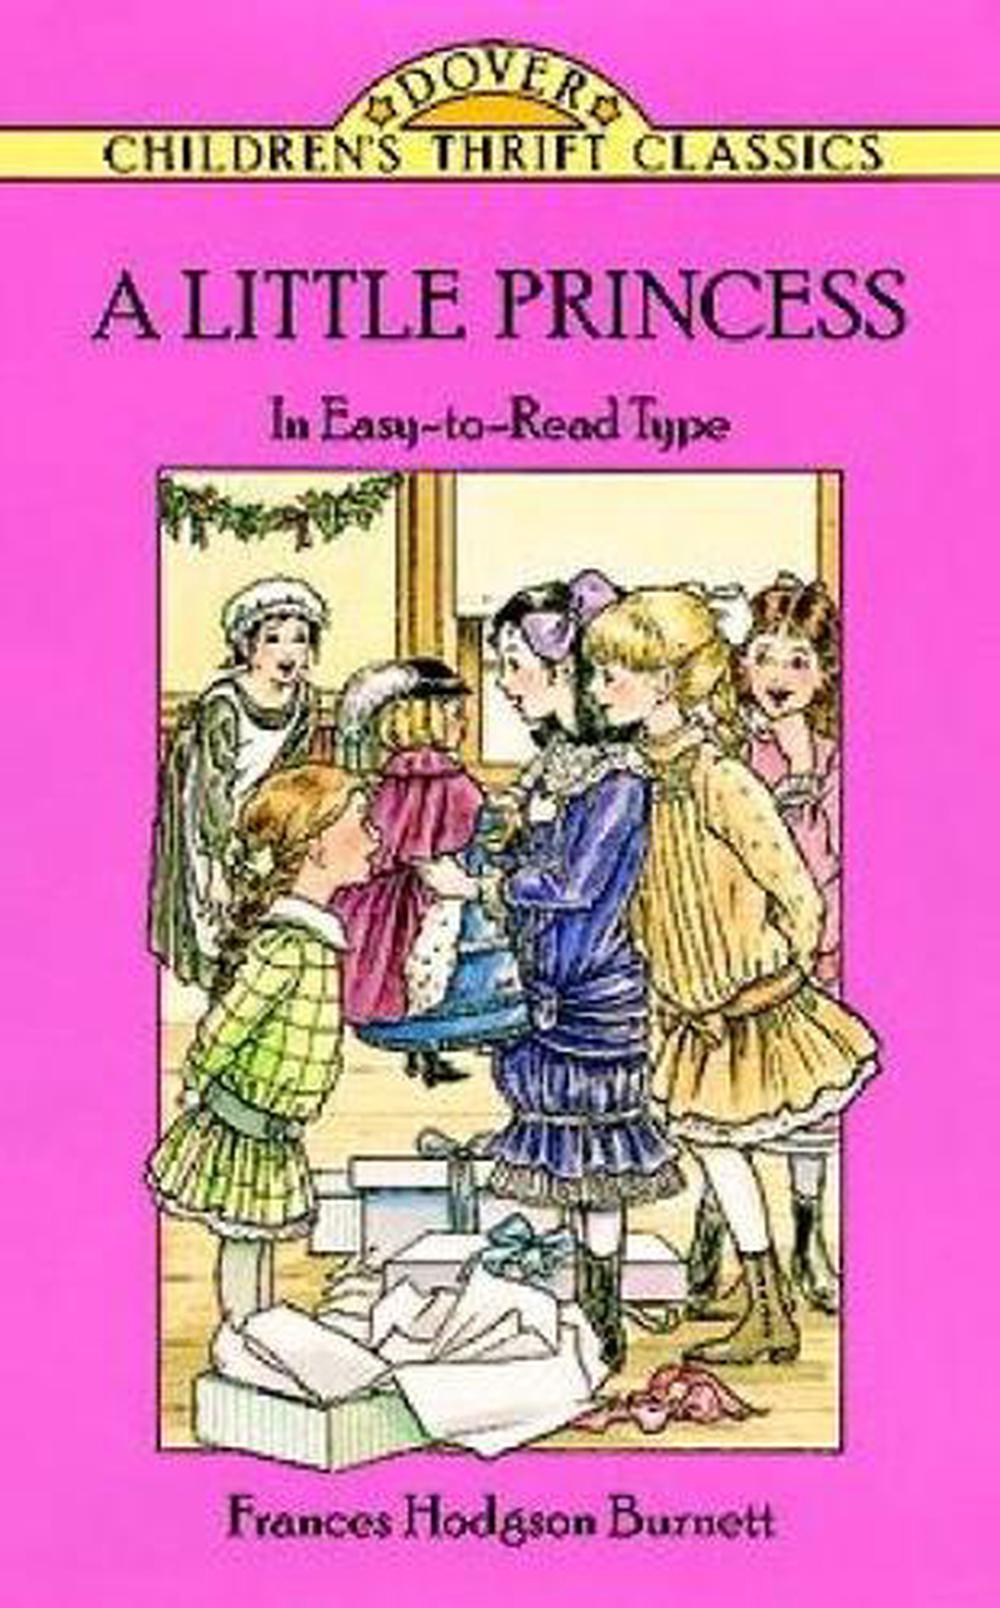 a little princess story by frances hodgson burnett